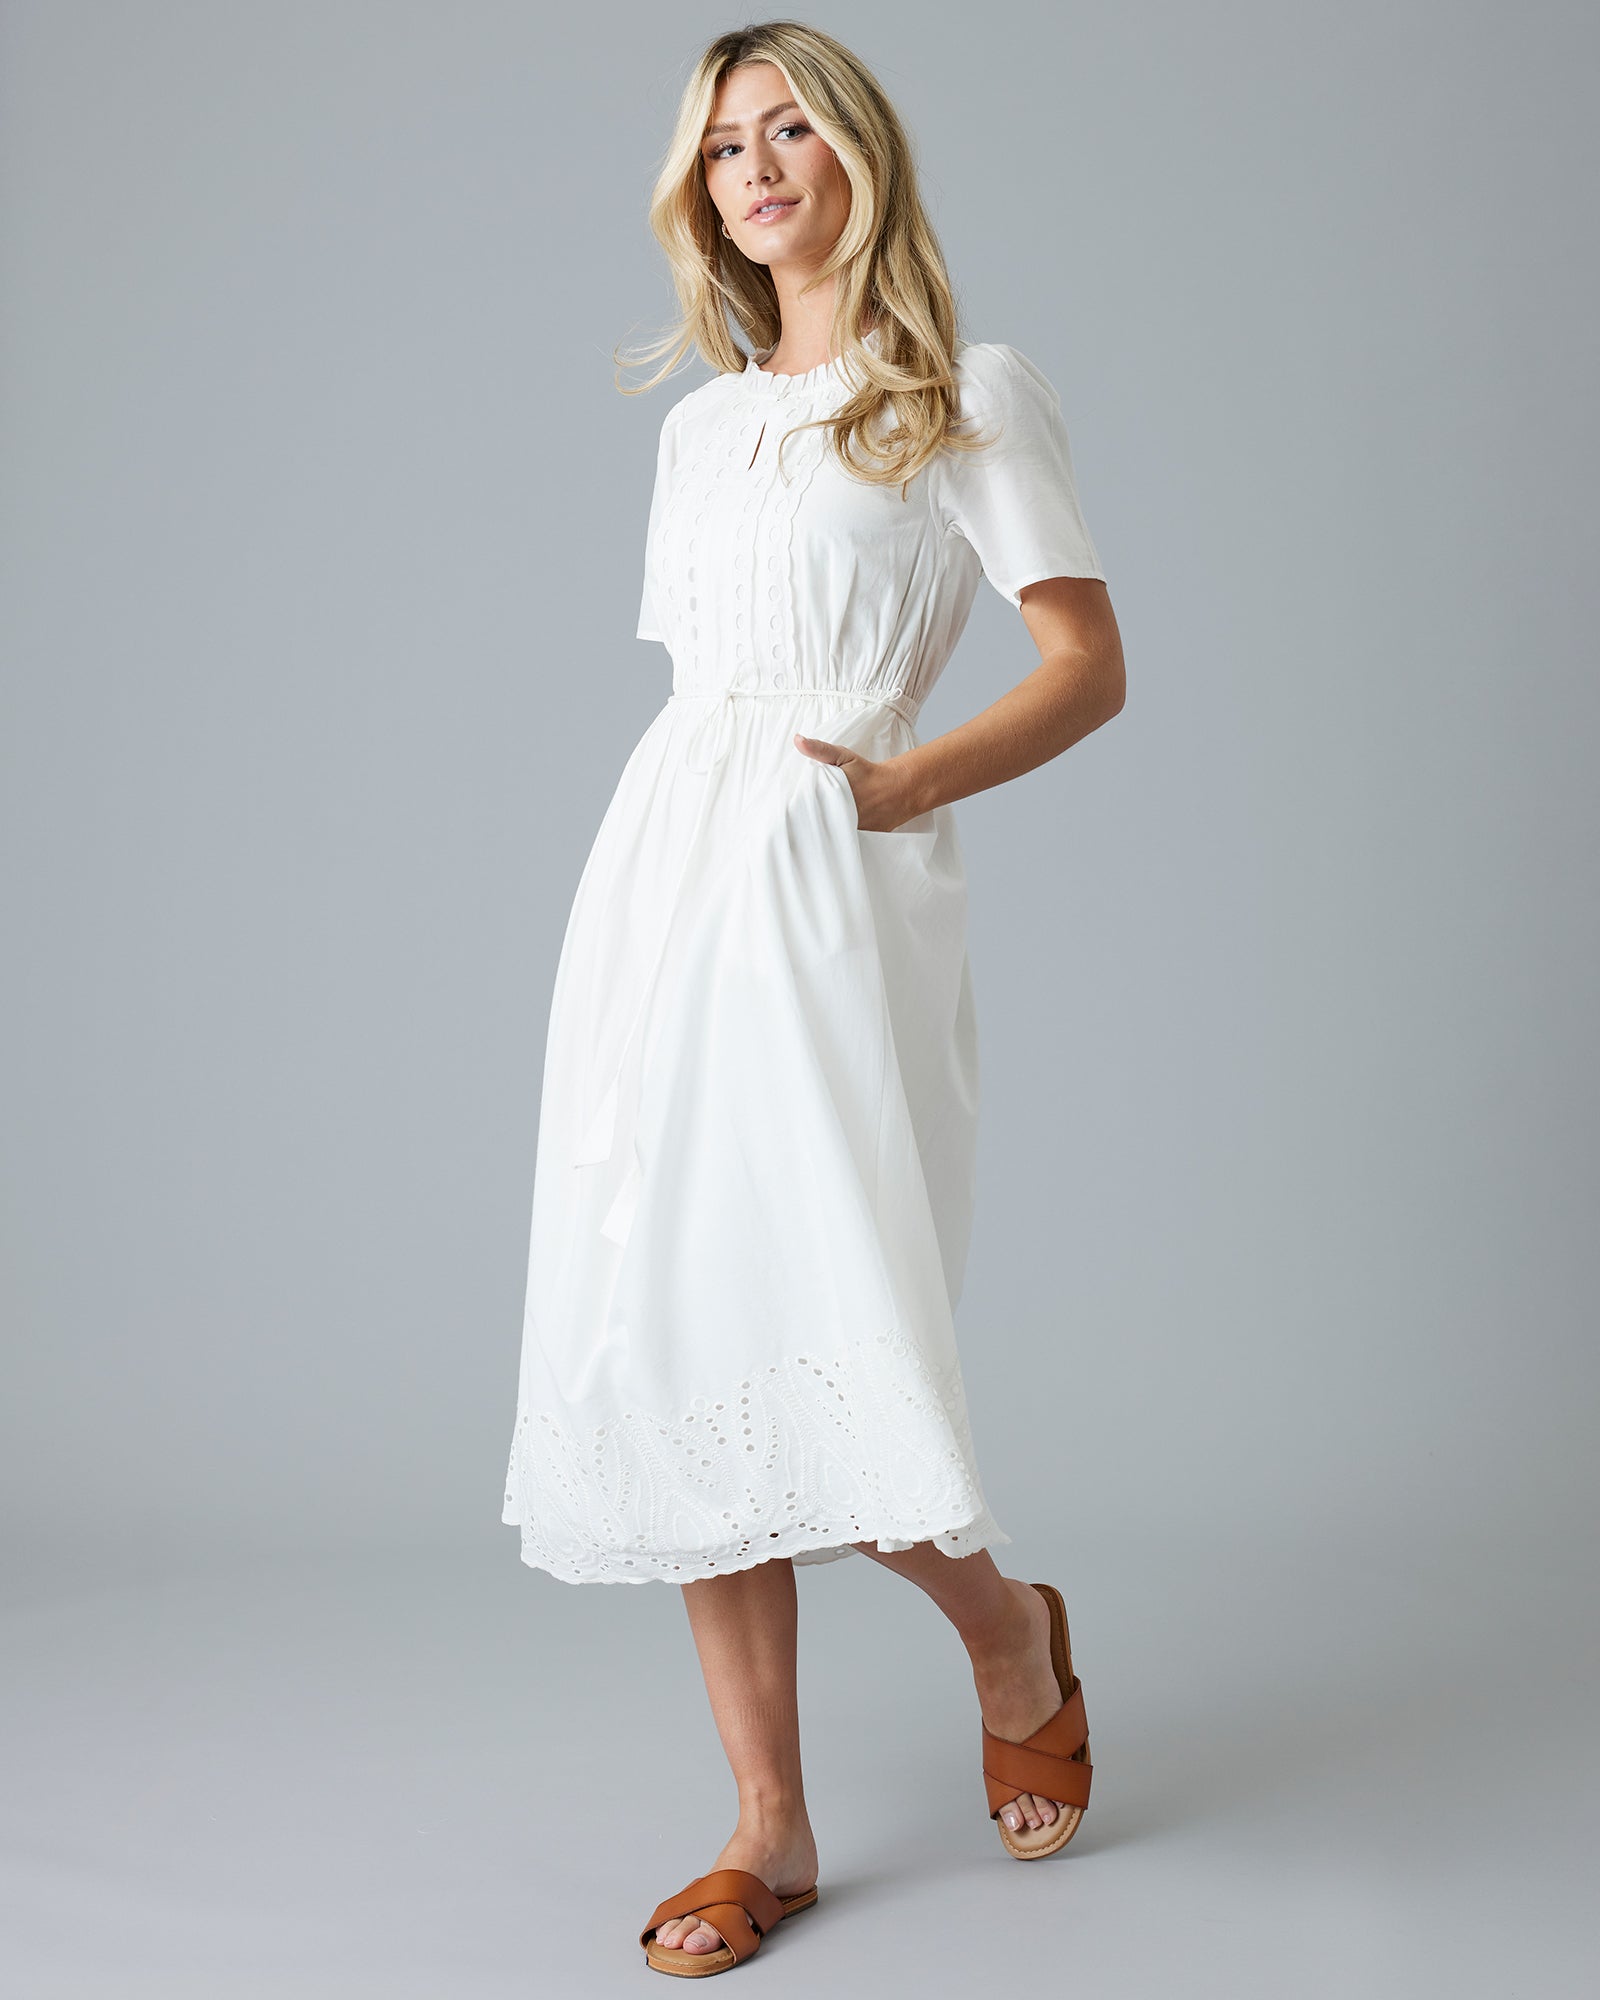 Woman in a white short sleeve midi-length dress